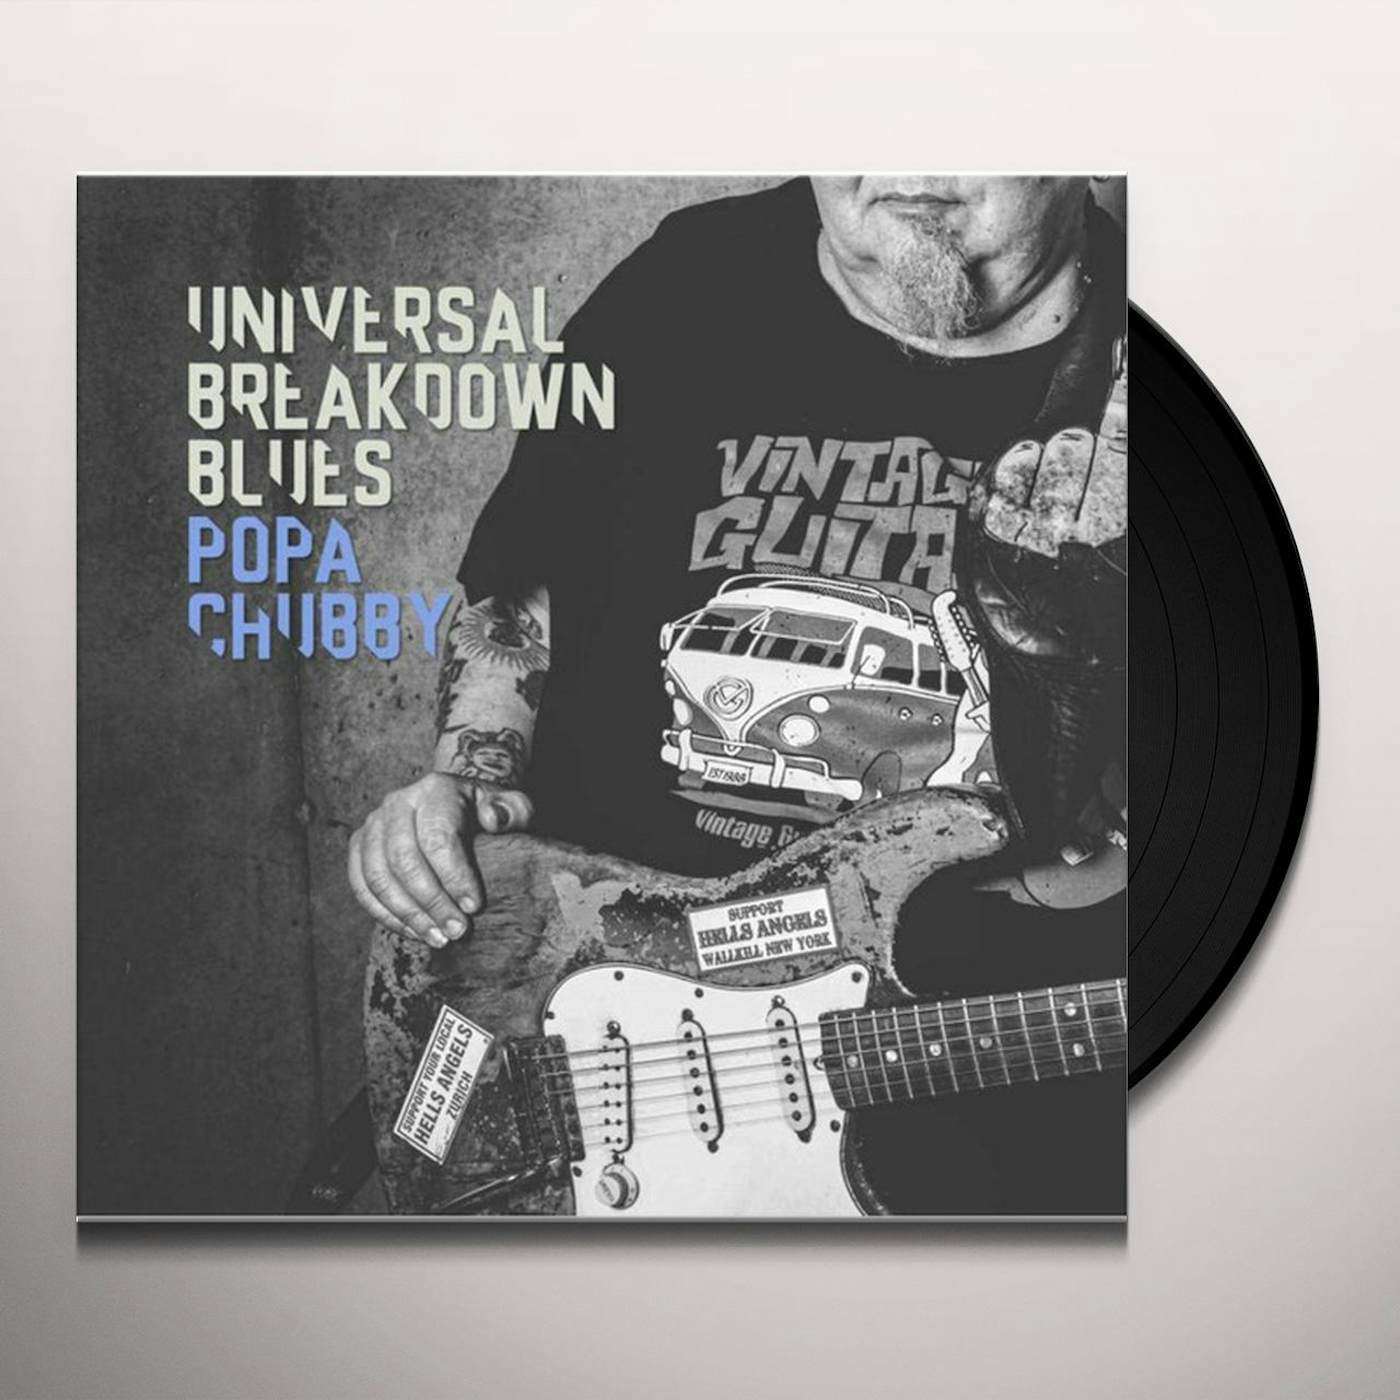 Popa Chubby Universal Breakdown Blues Vinyl Record